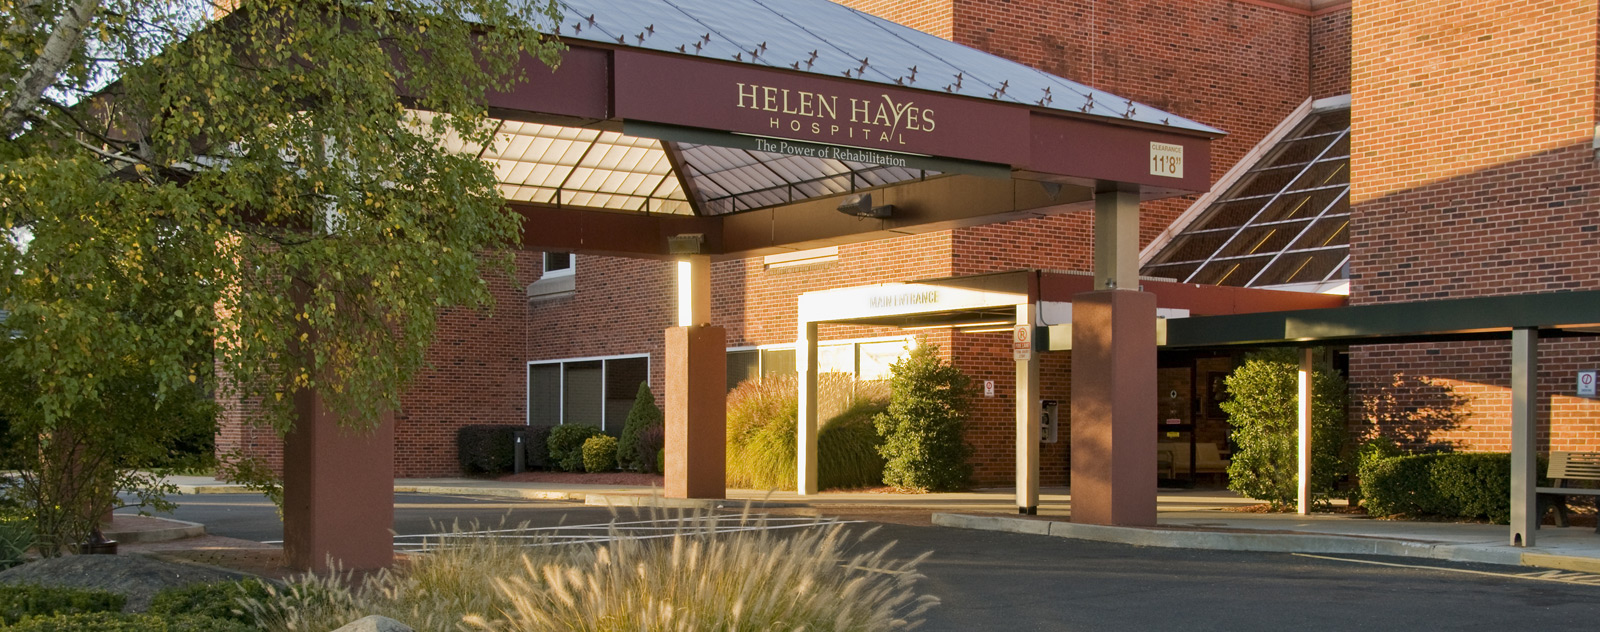 Helen Hayes Hospital Entrance